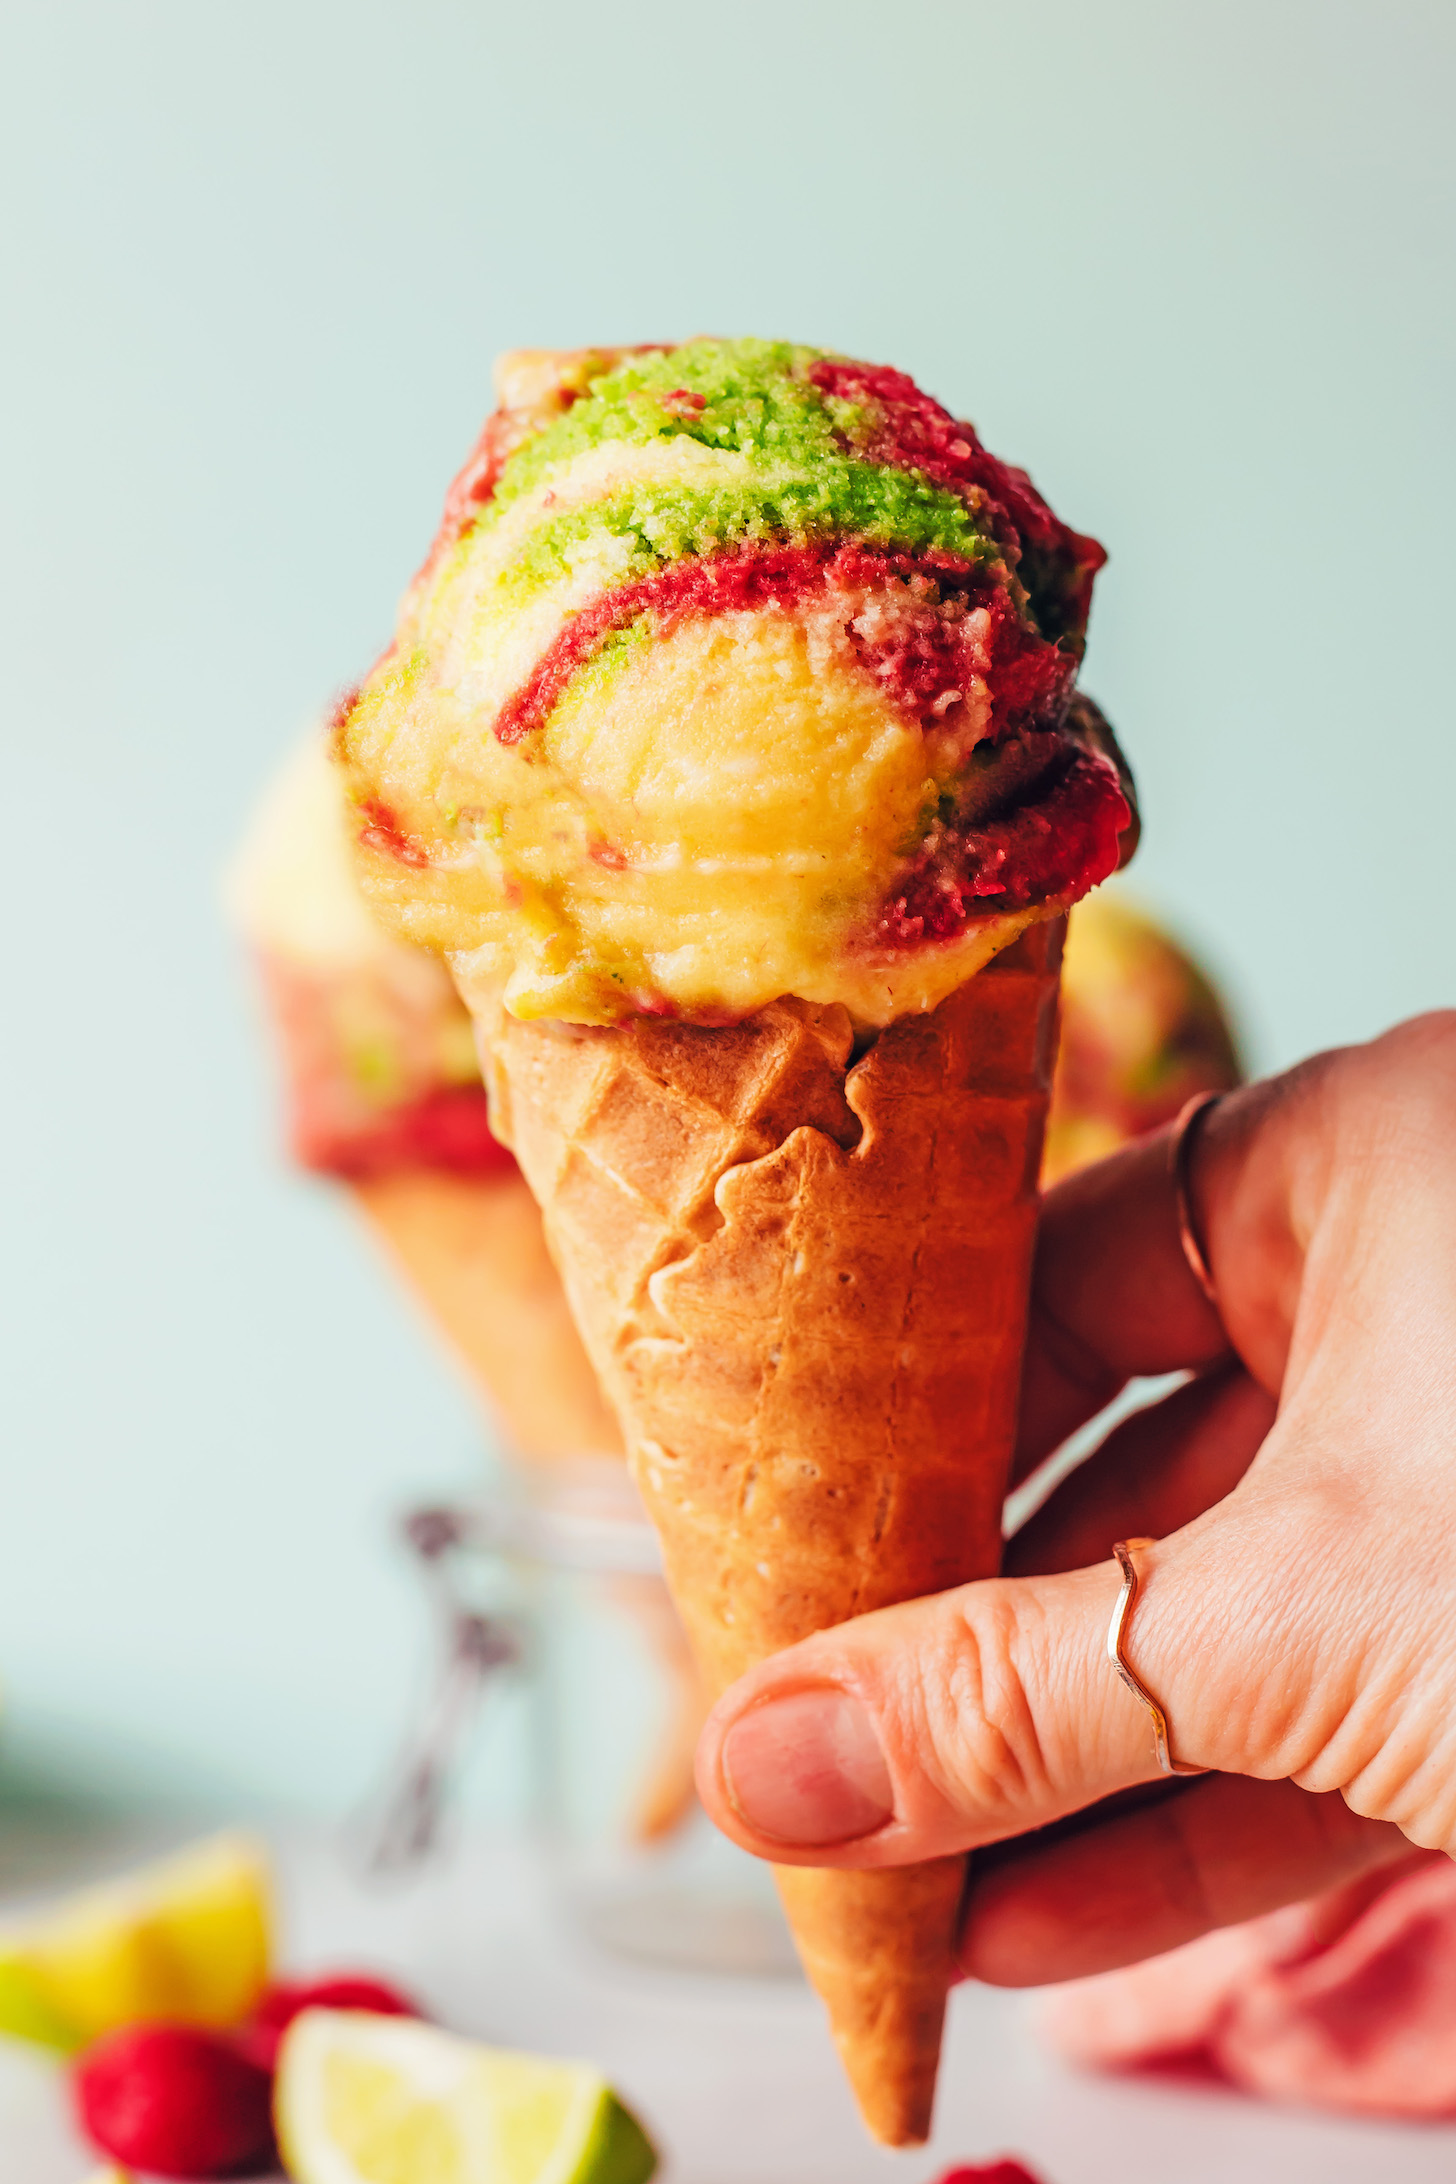 Hand holding an ice cream cone with homemade vegan rainbow sherbet ice cream